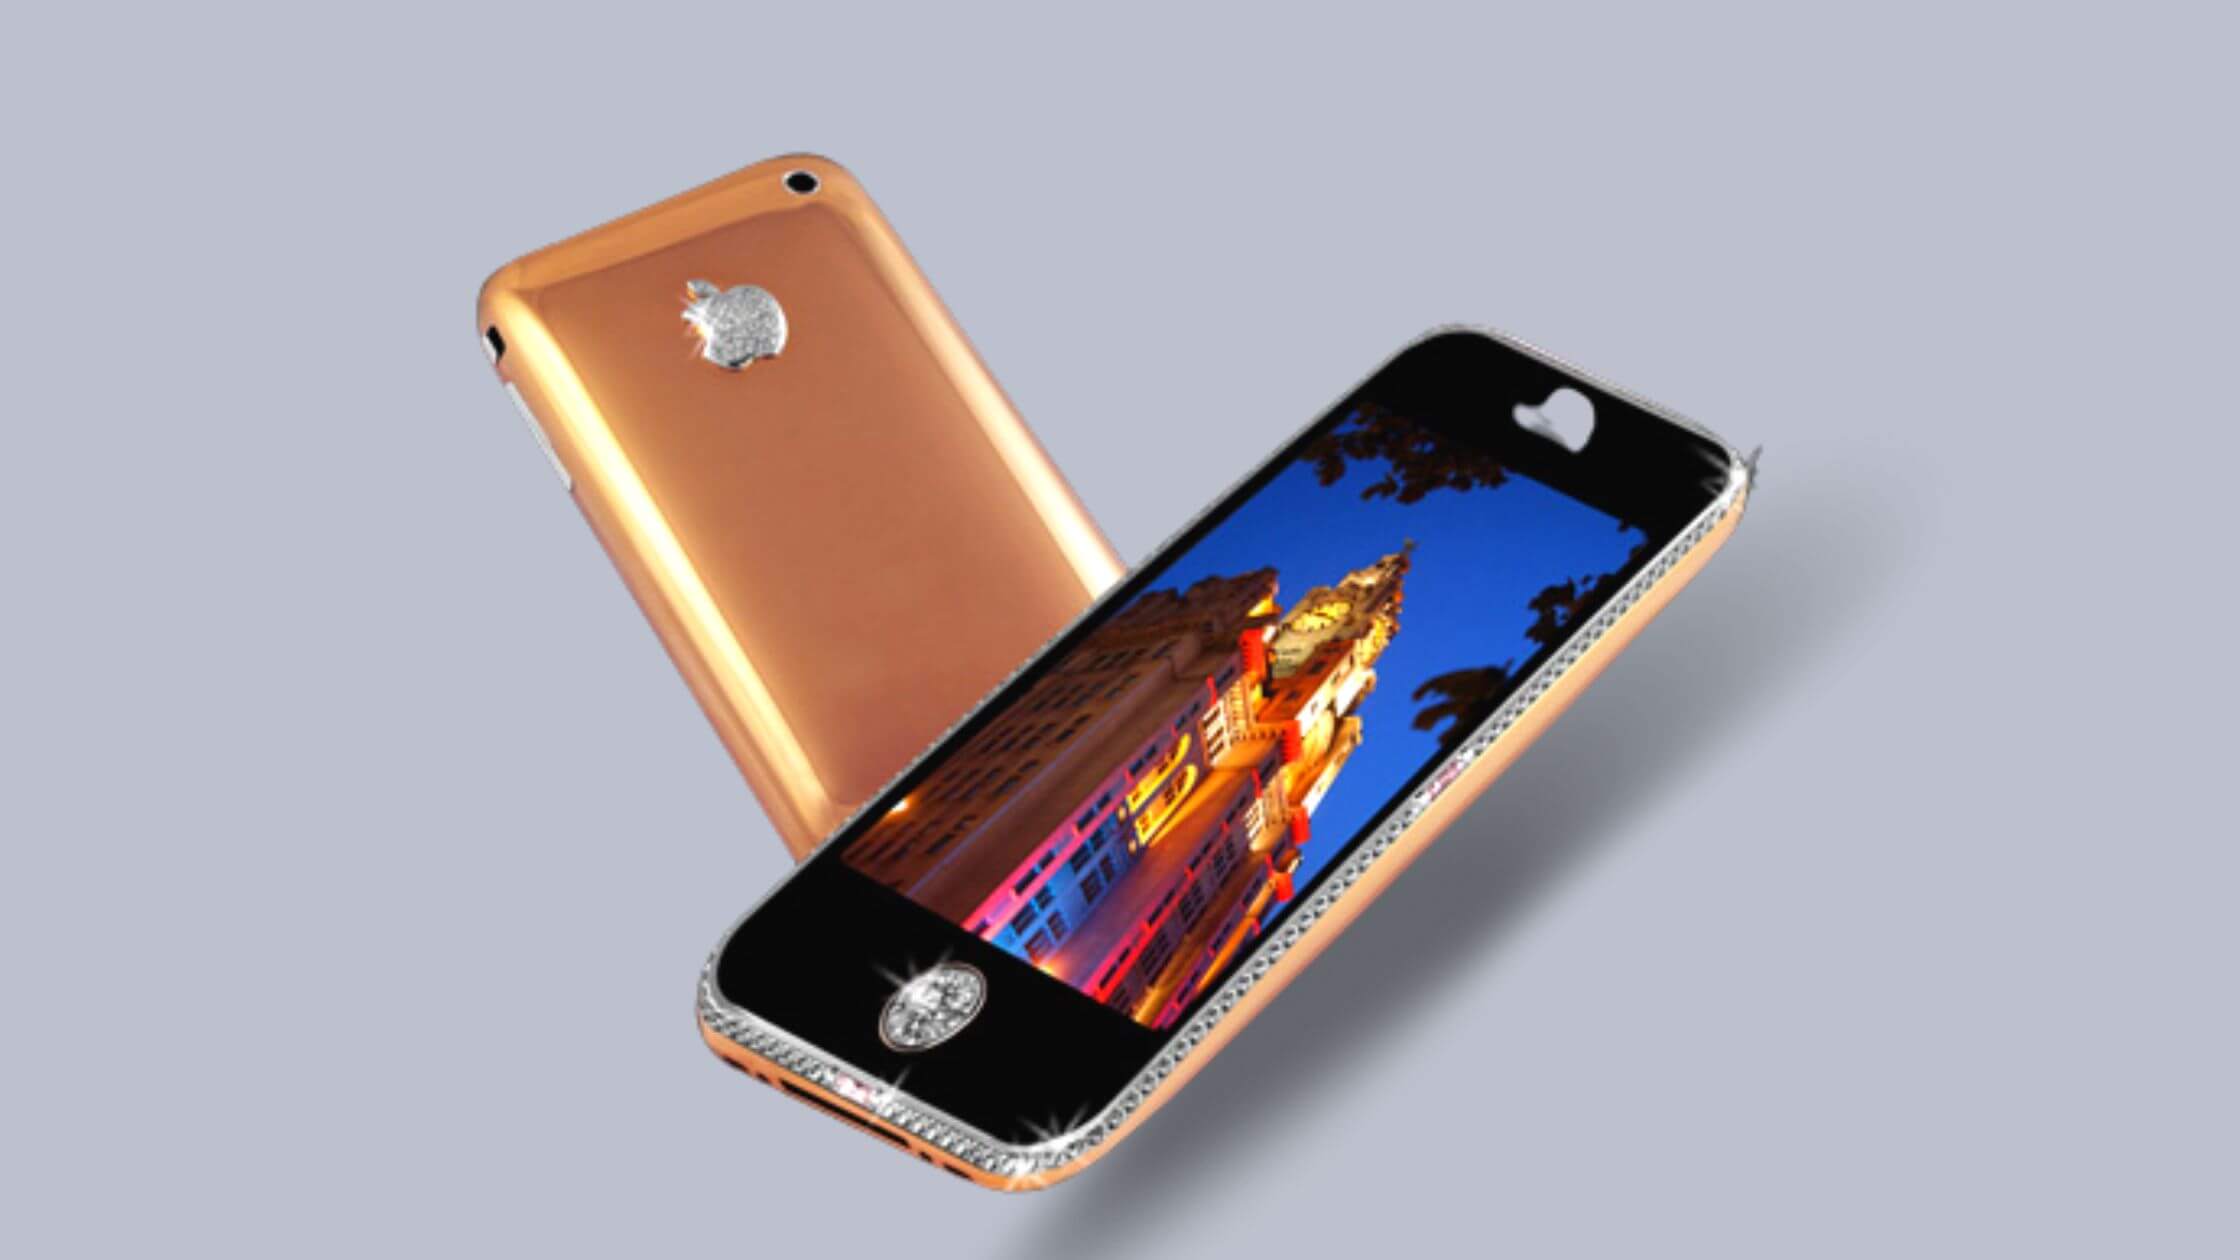 Gold Striker iPhone 3GS Supreme